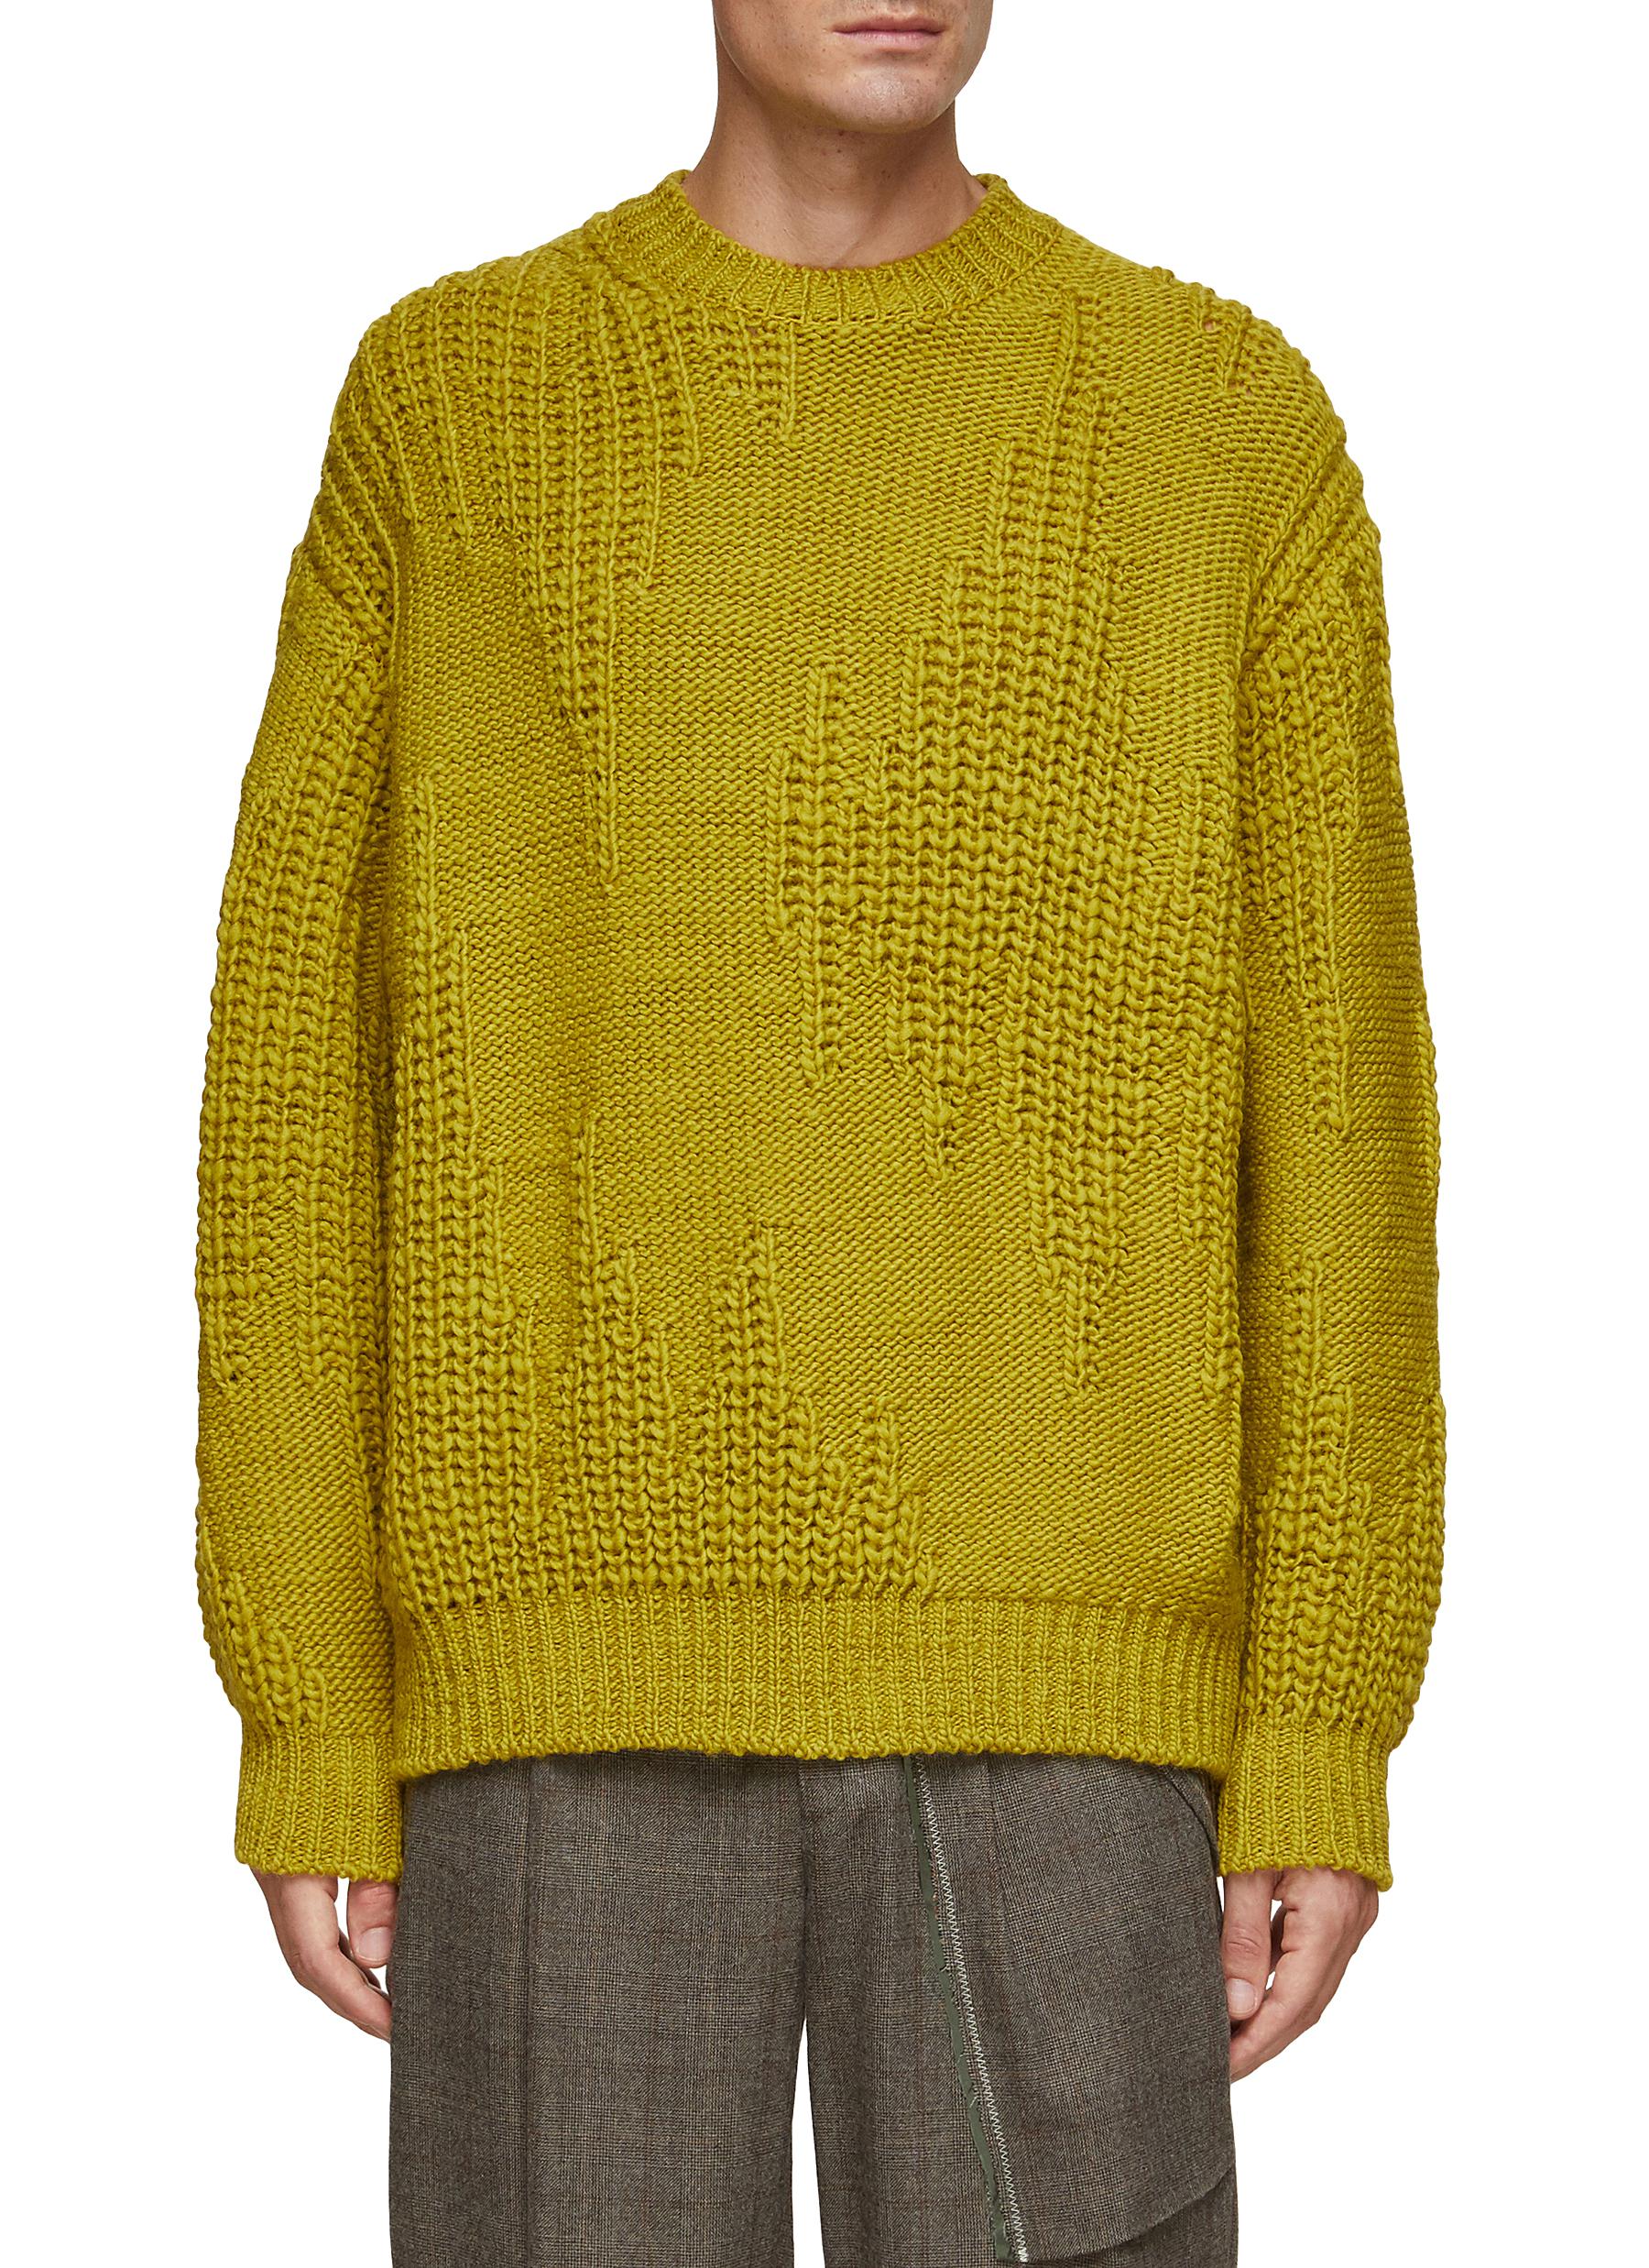 YOKE Iregular Knitted Crewneck Sweater